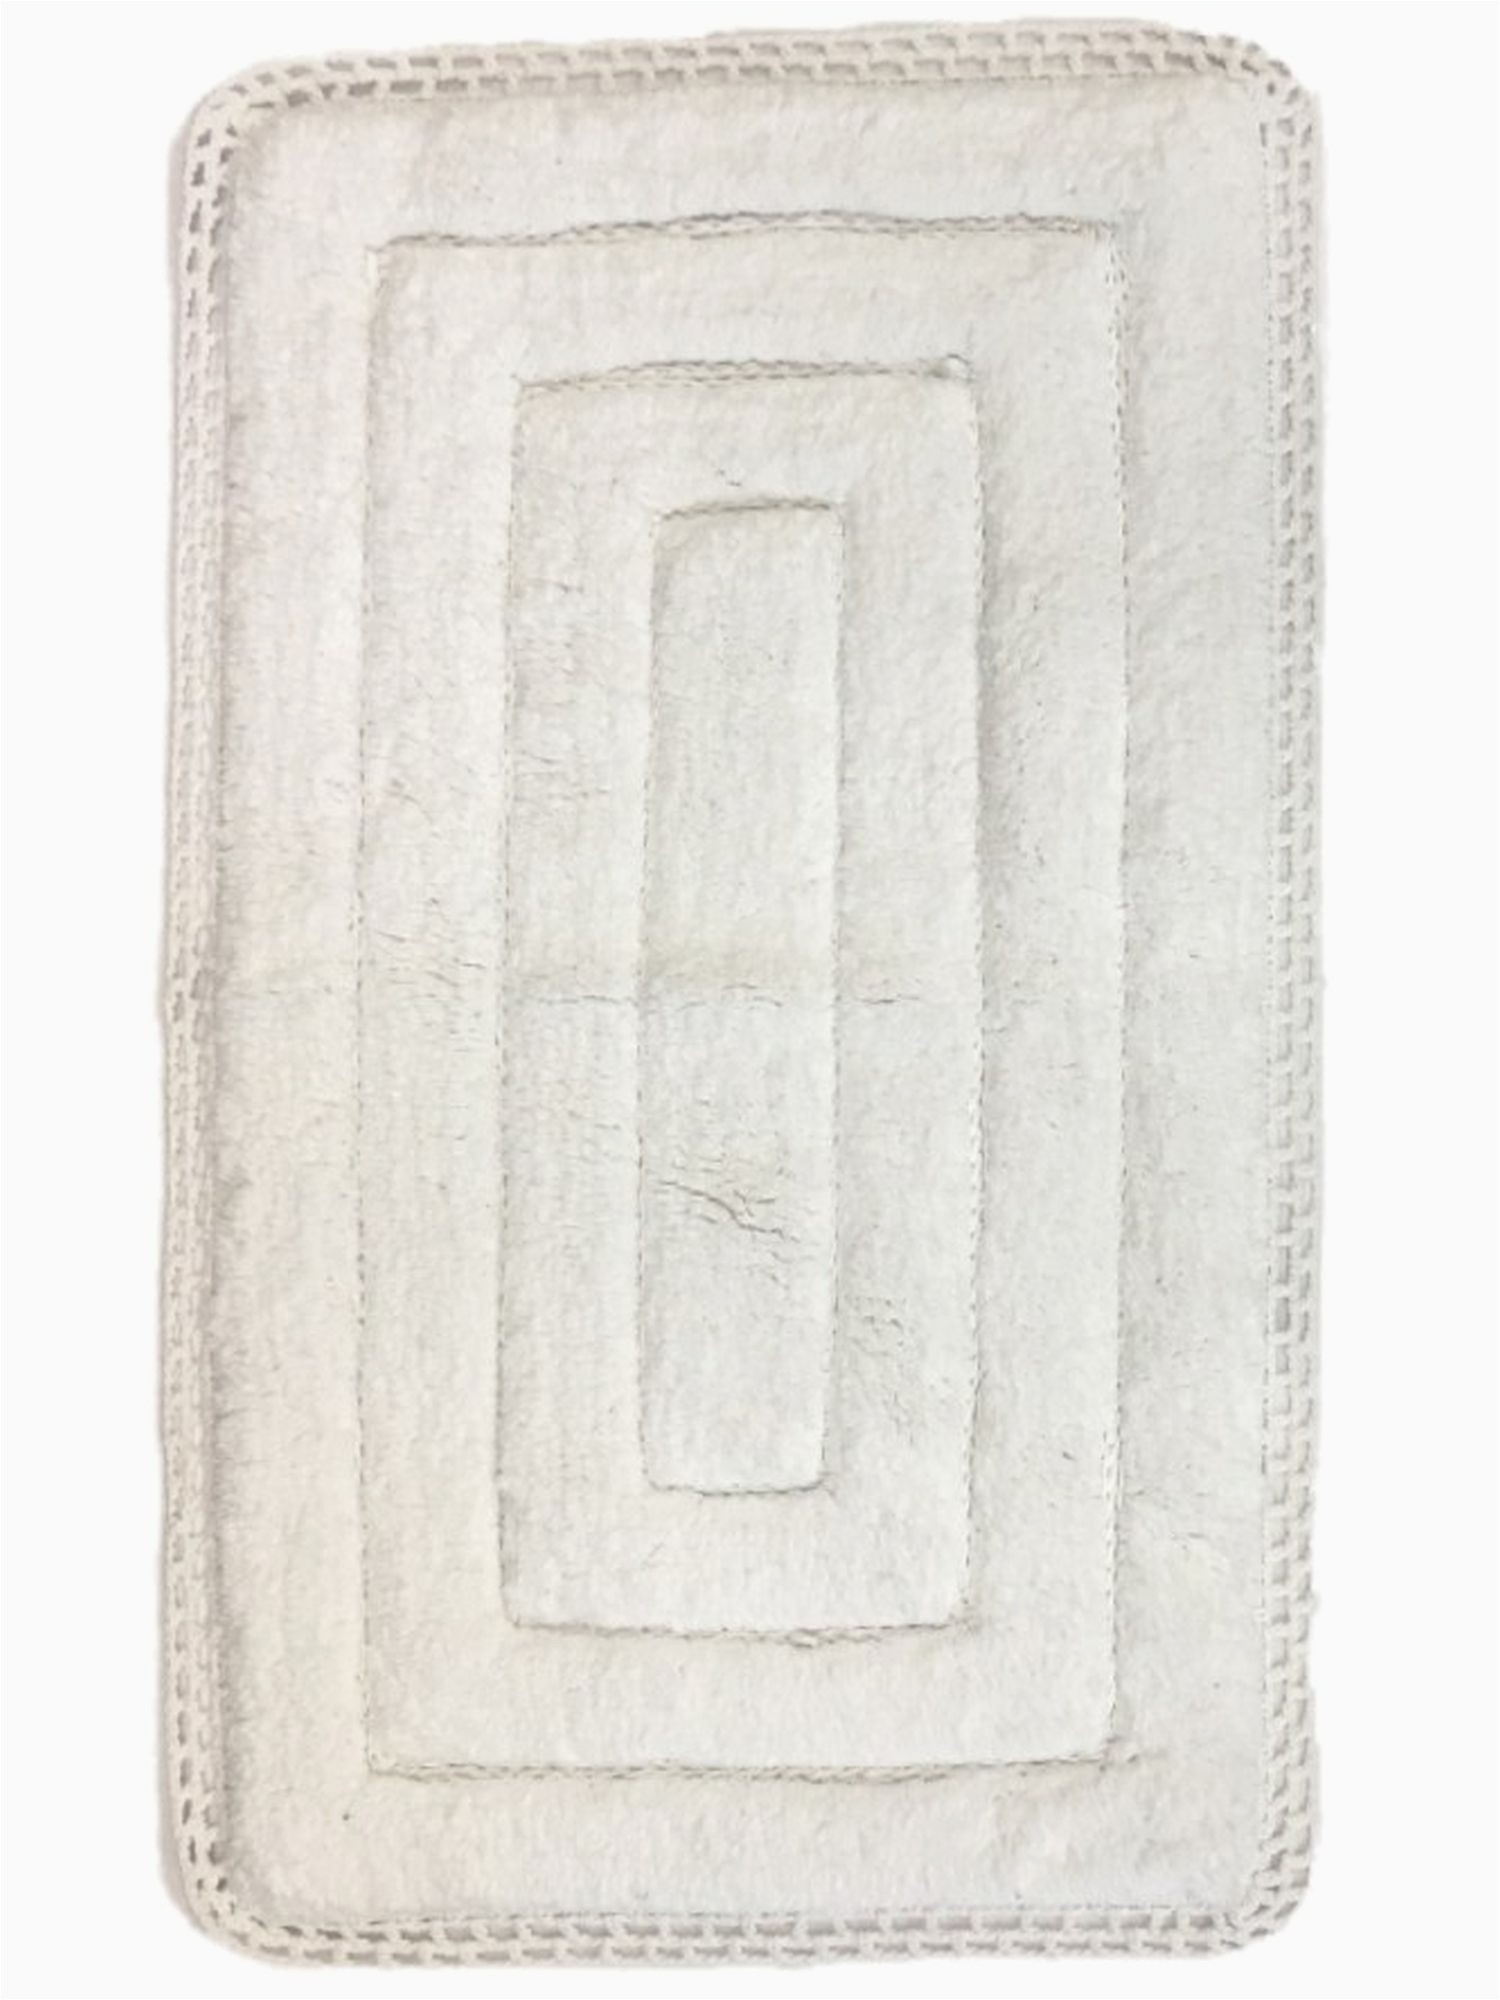 White Cotton Bathroom Rugs Threshold Plush White Bath Rug with Crochet Edge Cotton Bath Mat 20×32 Walmart